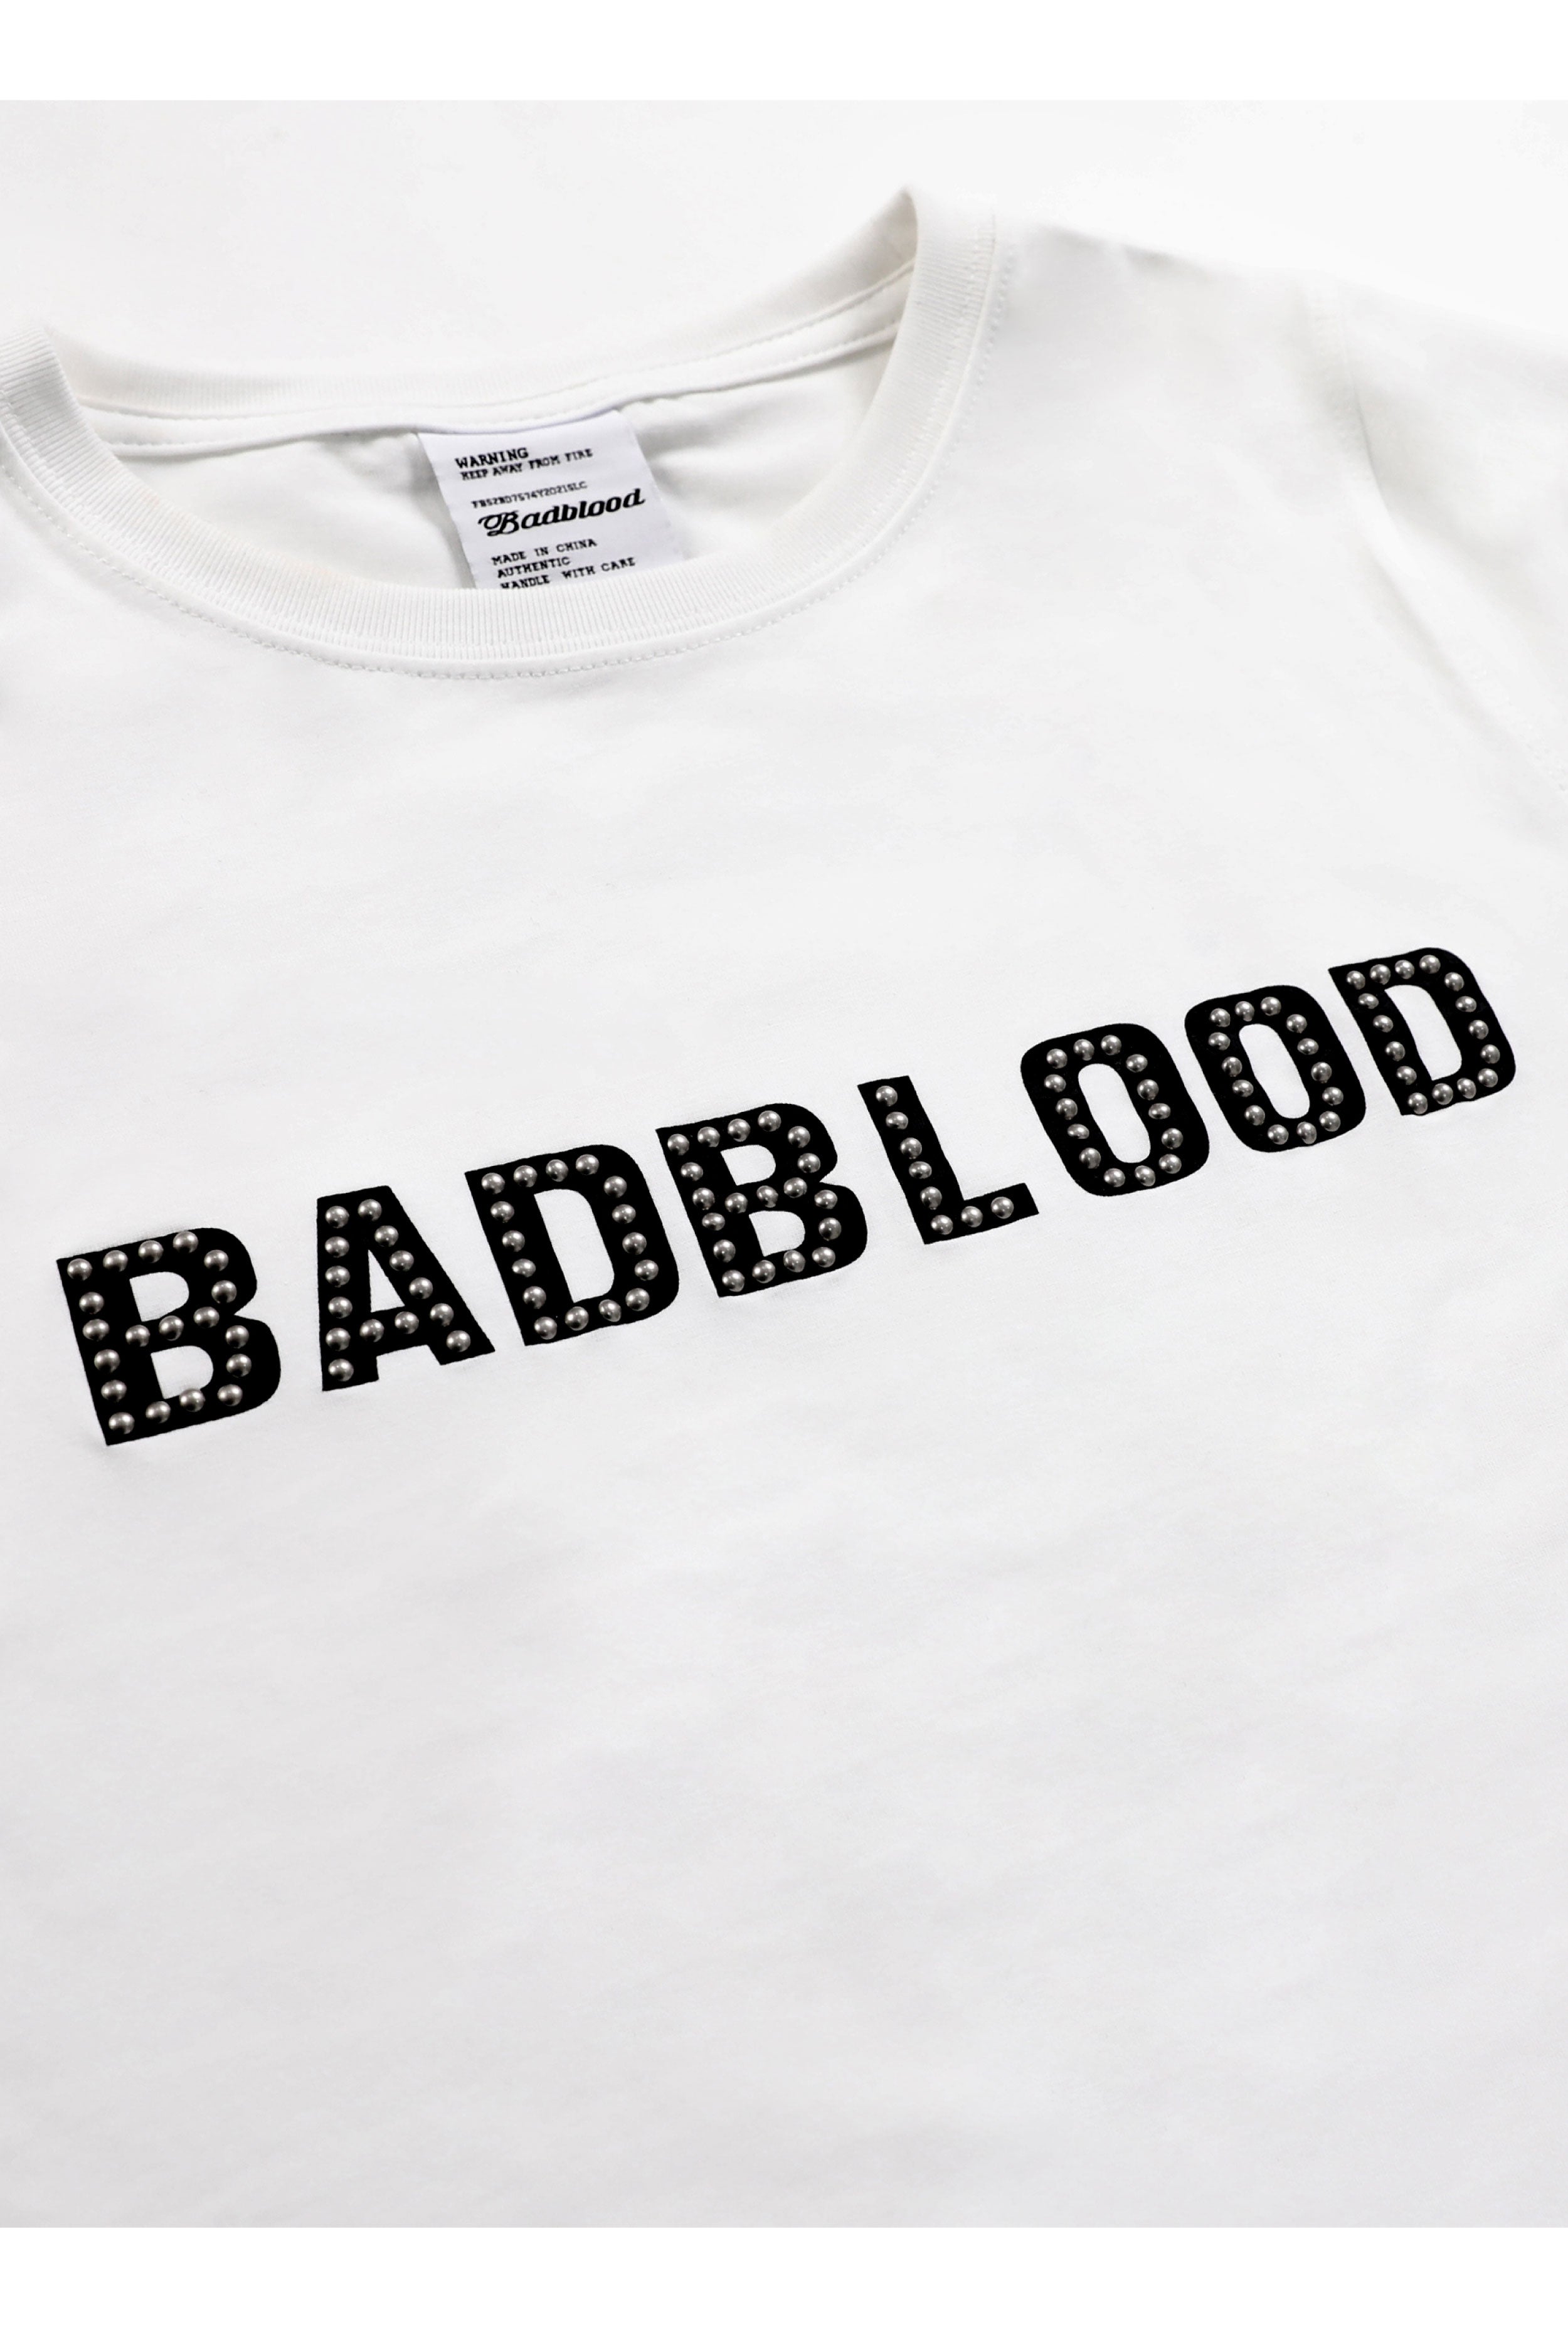 Badblood 鉚釘標誌短袖修身白色